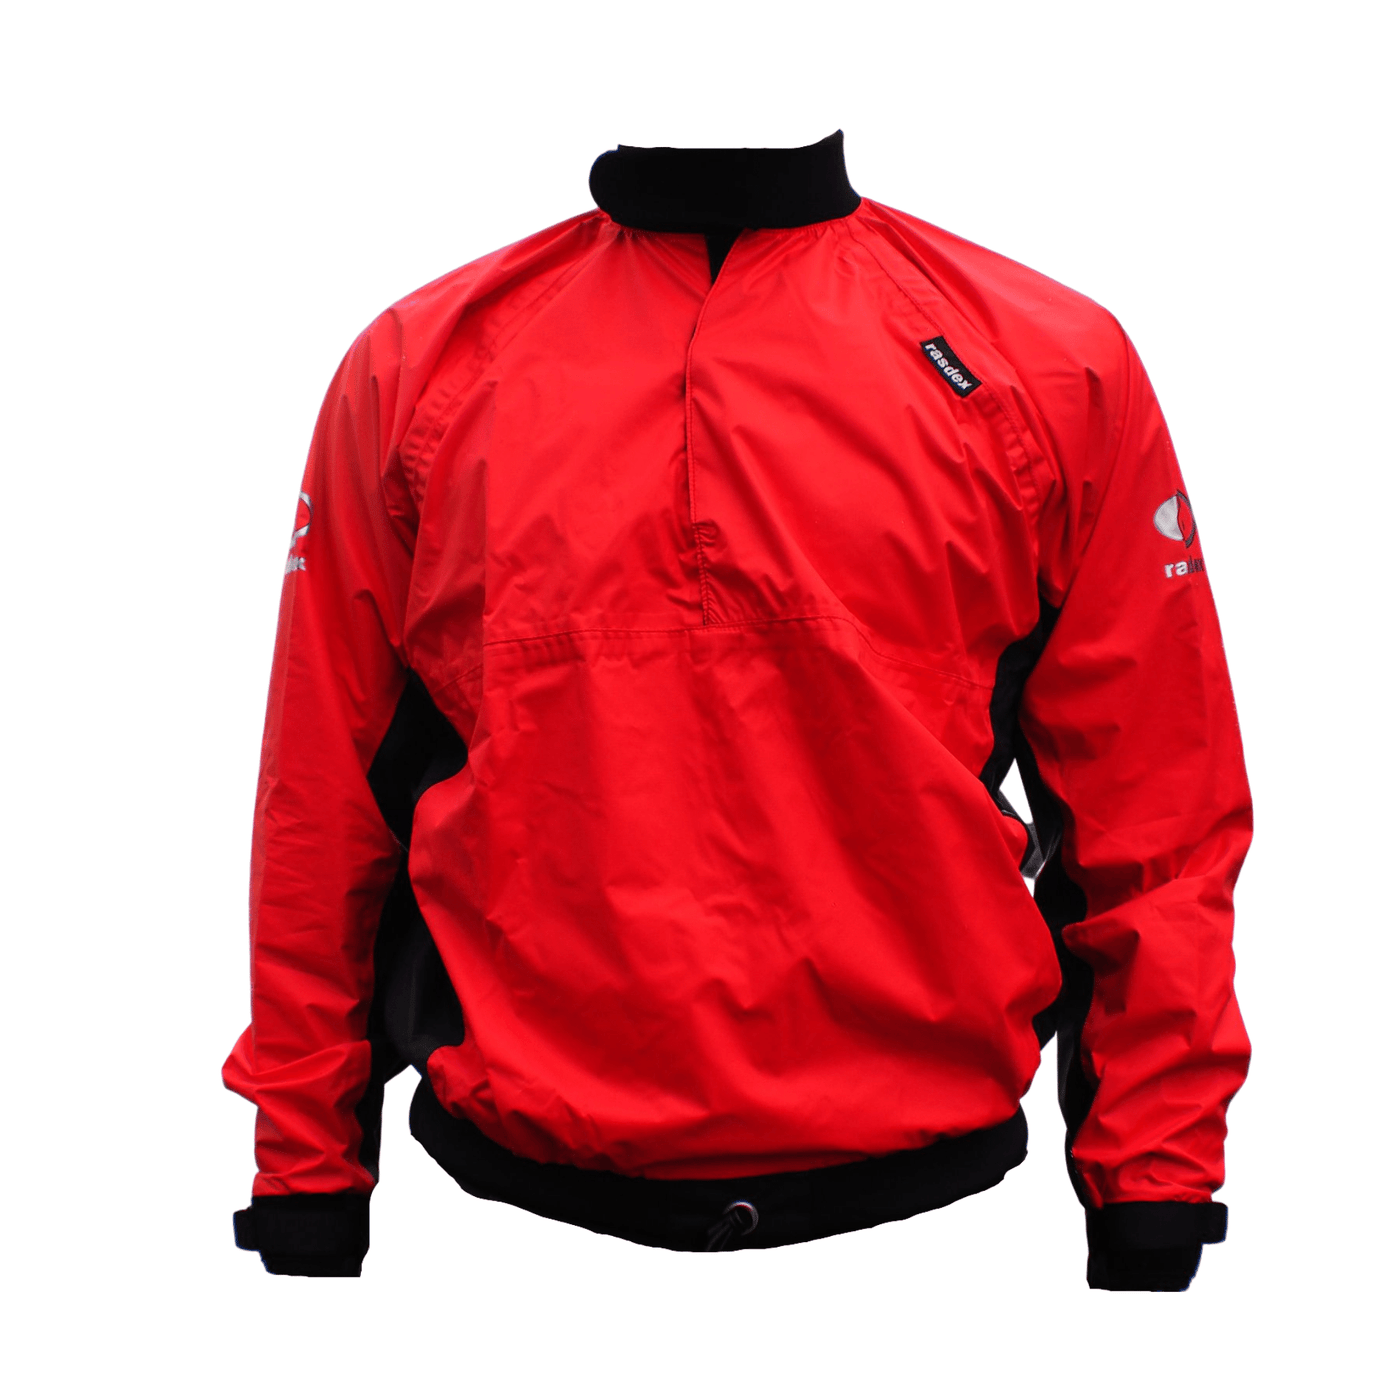 Rasdex Classic Paddle Jacket | Multisport Gear and Clothing | NZ #red-rasdex